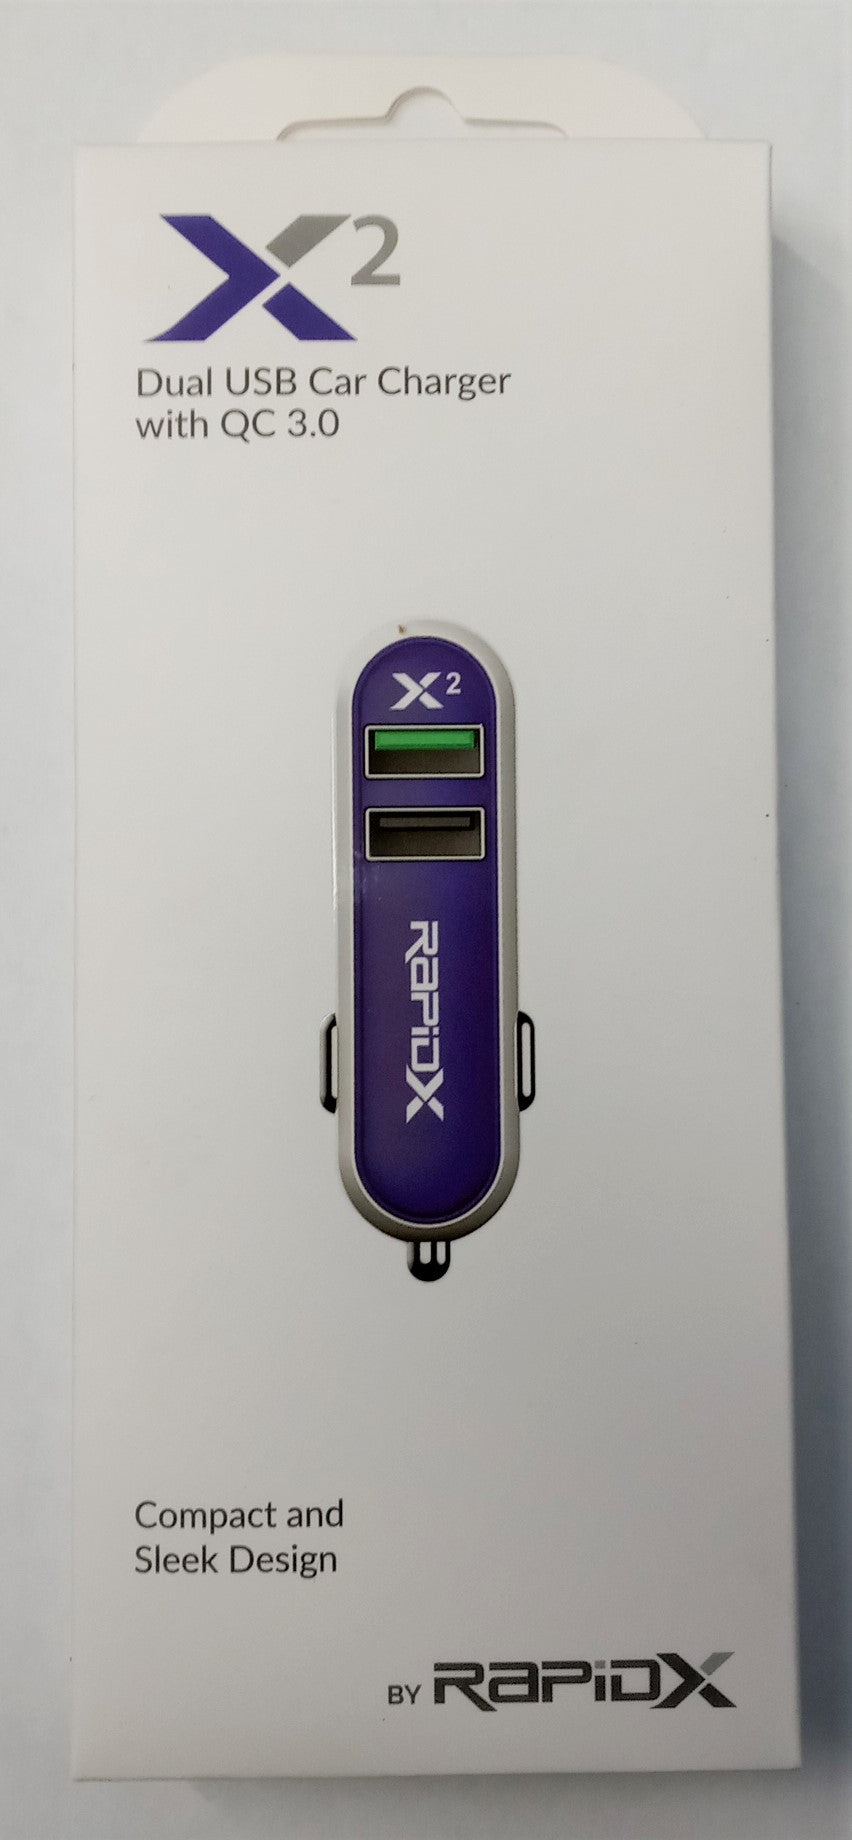 Rapidx RX-X2QCPUR X2 Dual USB Car Charger with QC 3.0